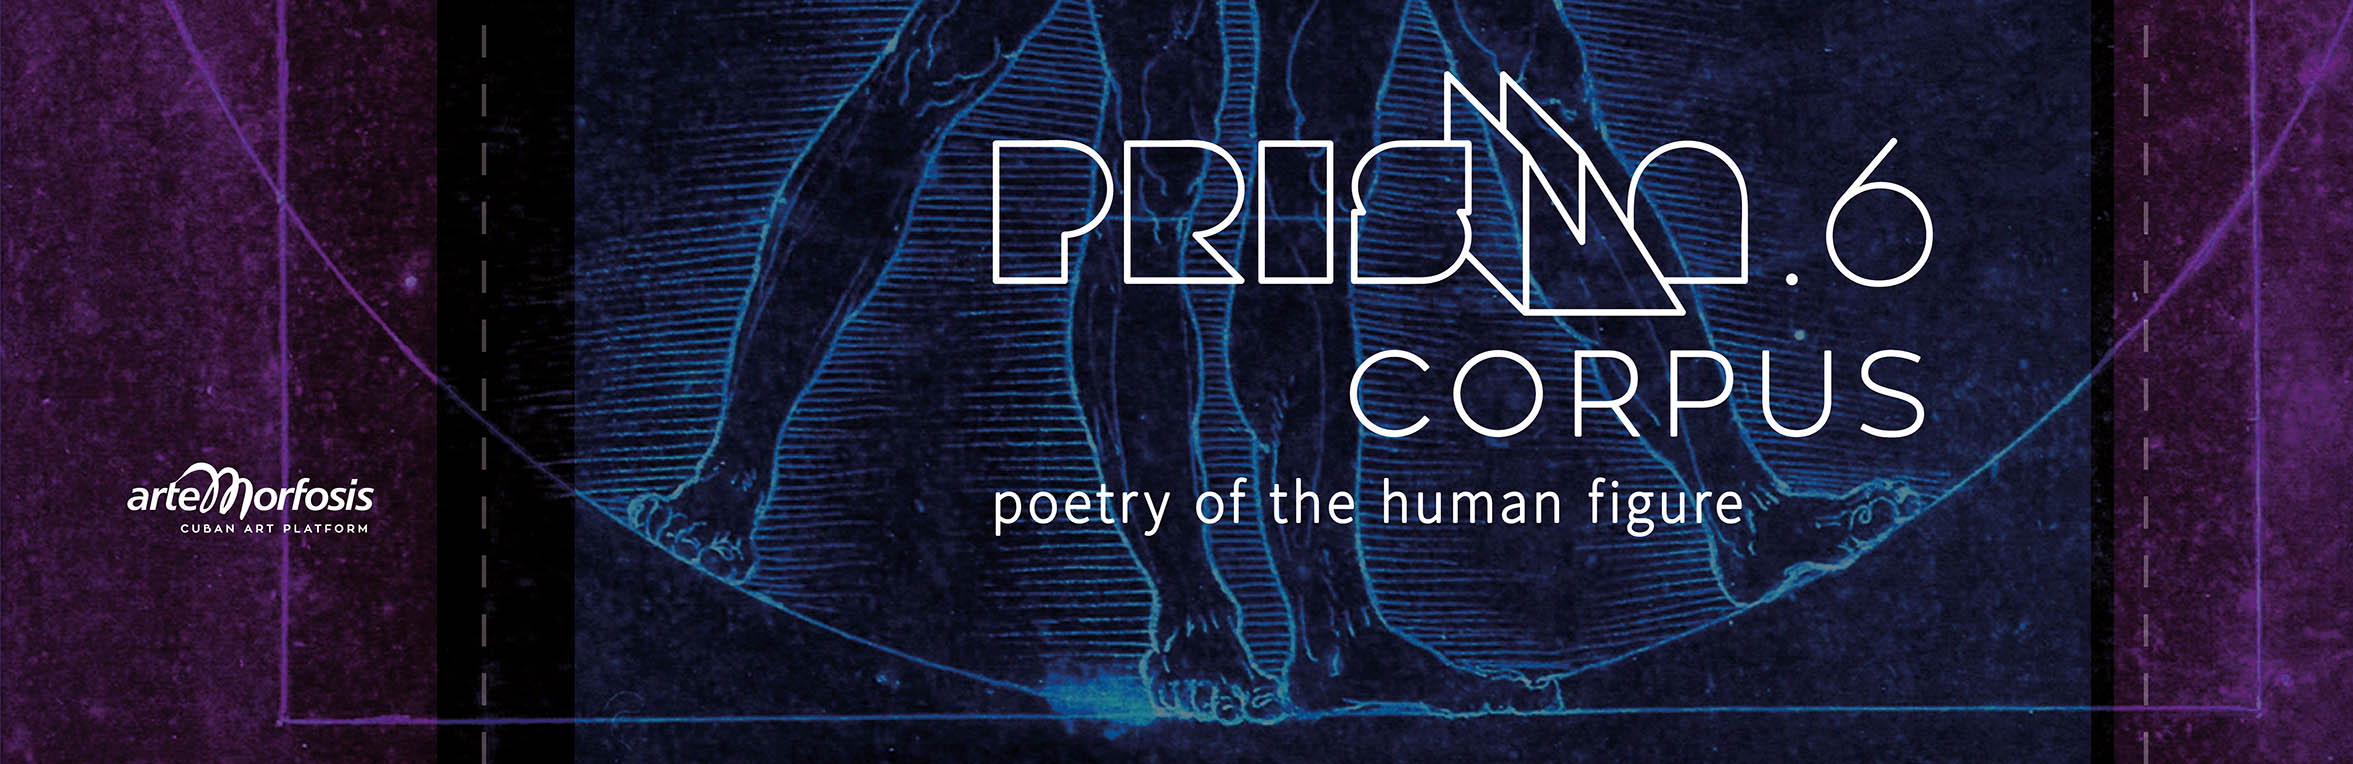 PRISMA 6 – CORPUS – Poetry of the Human Figure